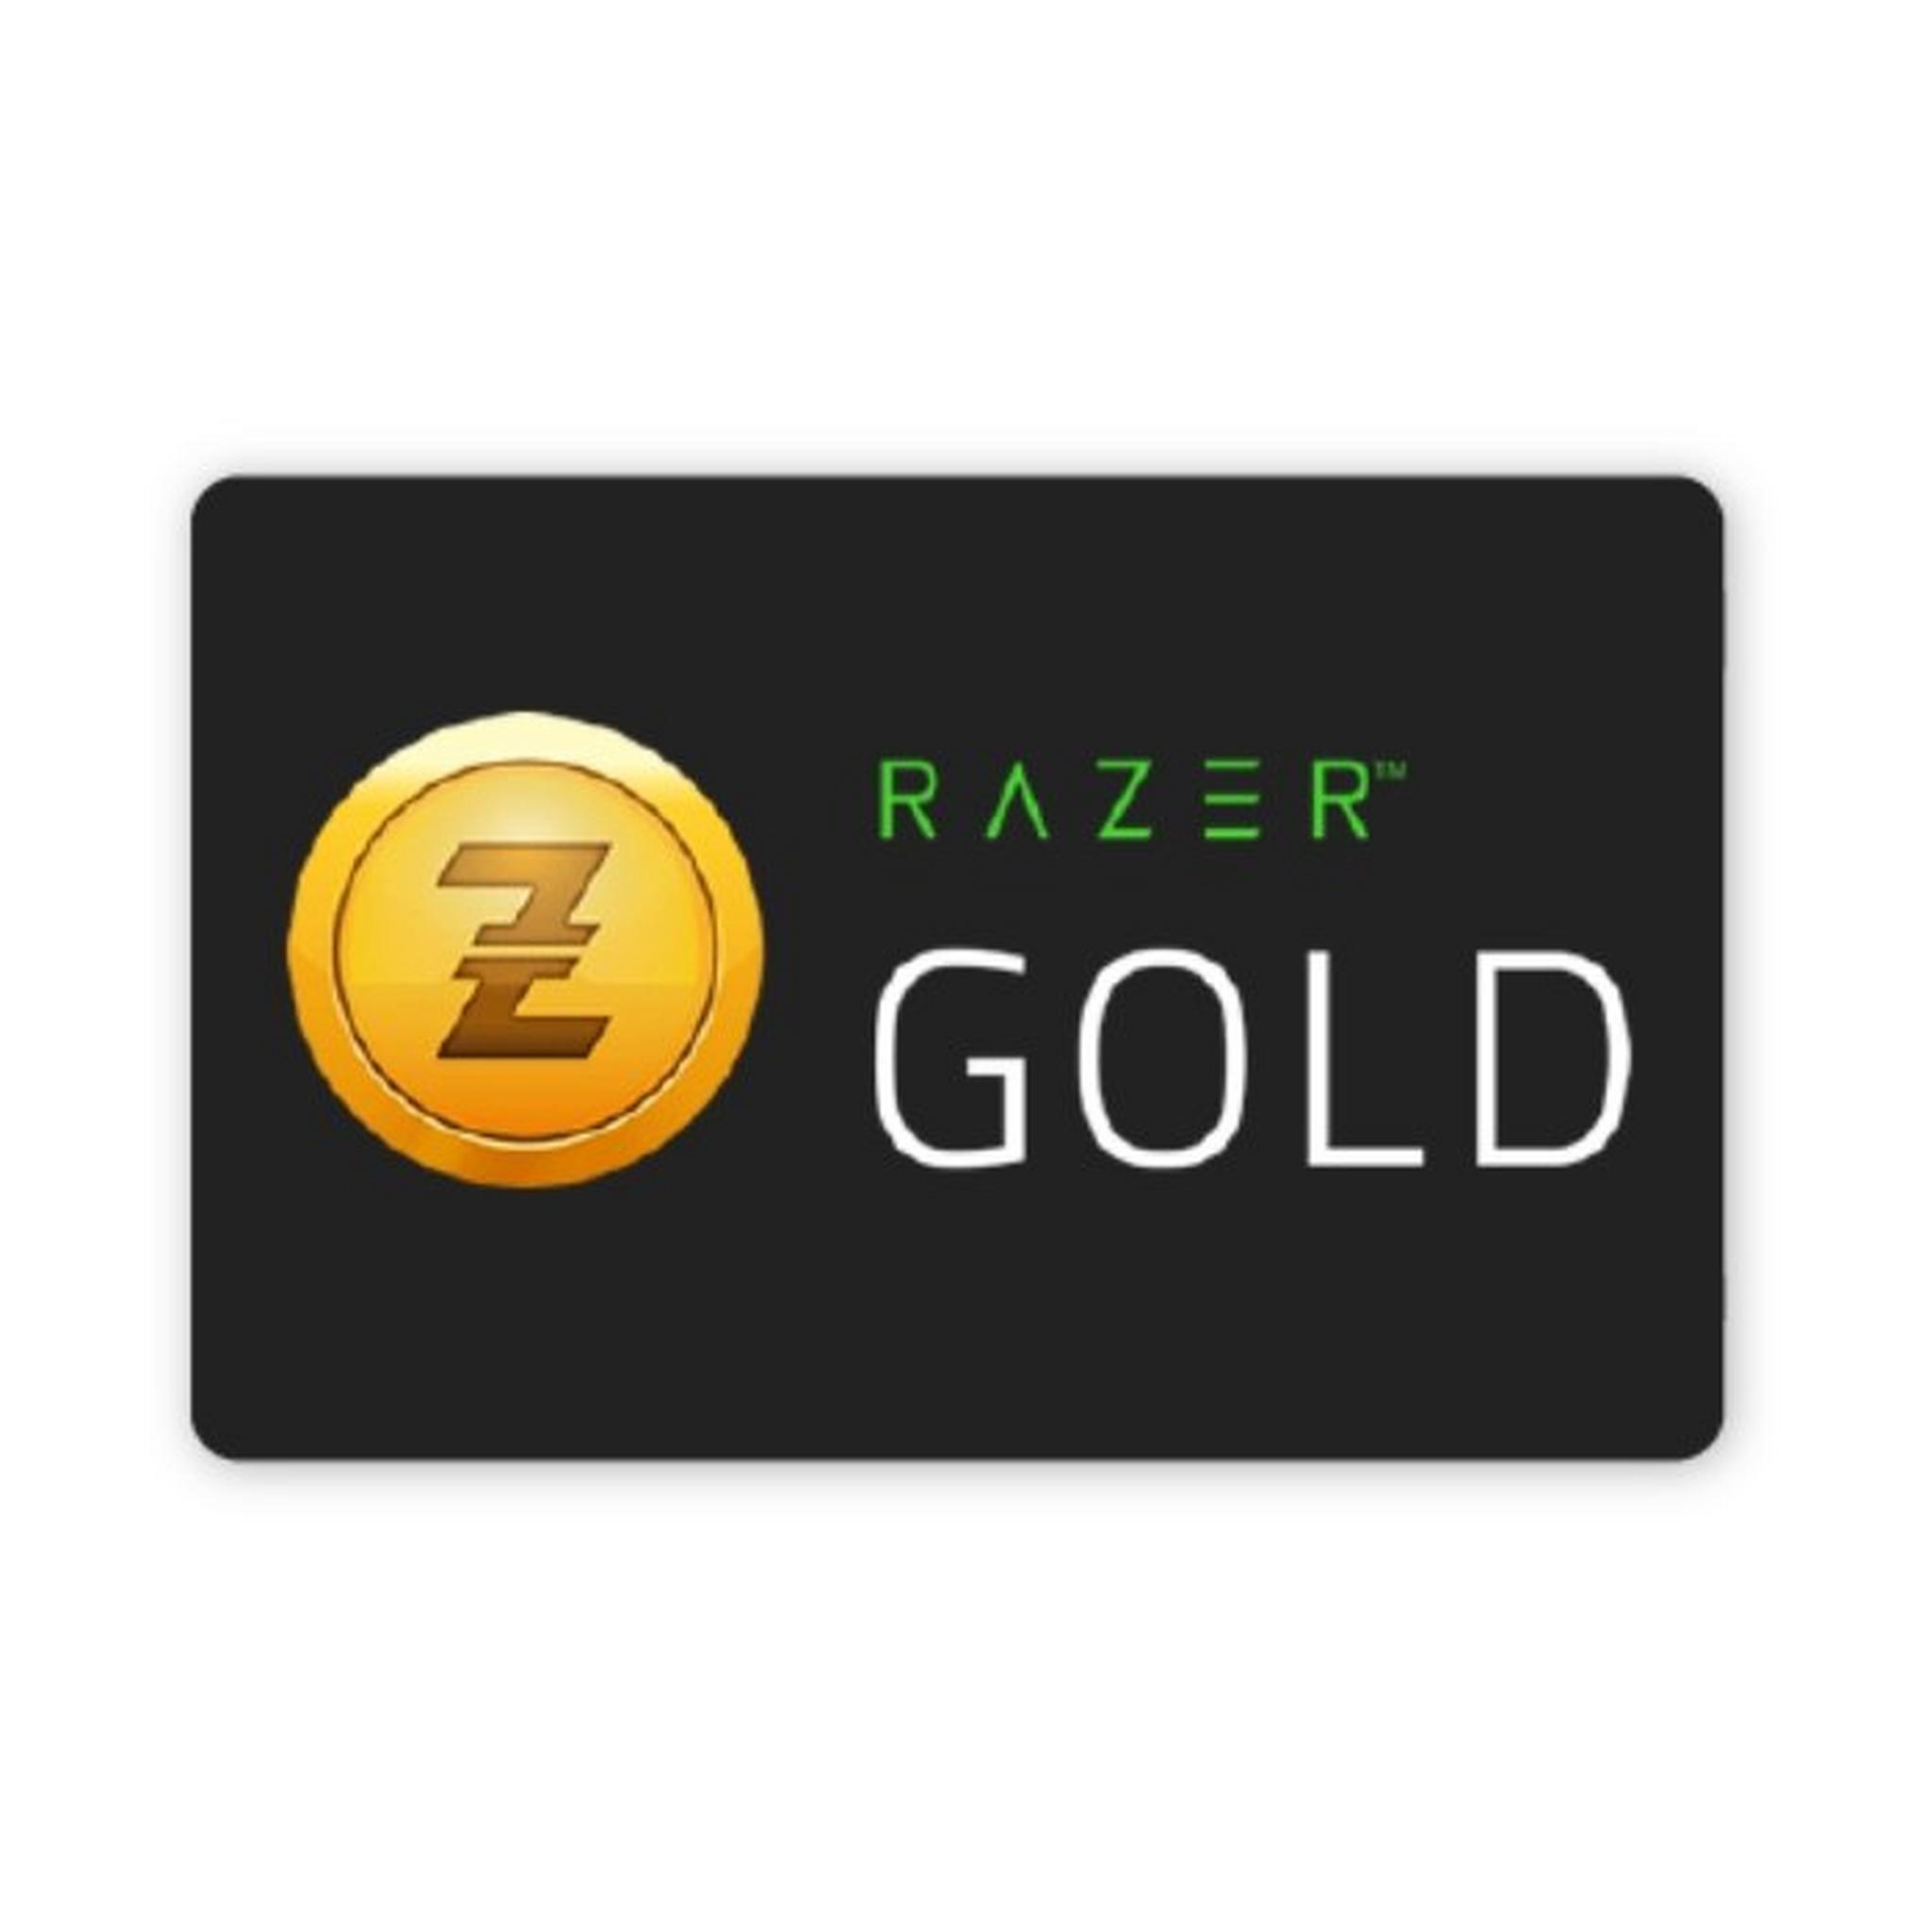 Razer Gold Gift Card - $25